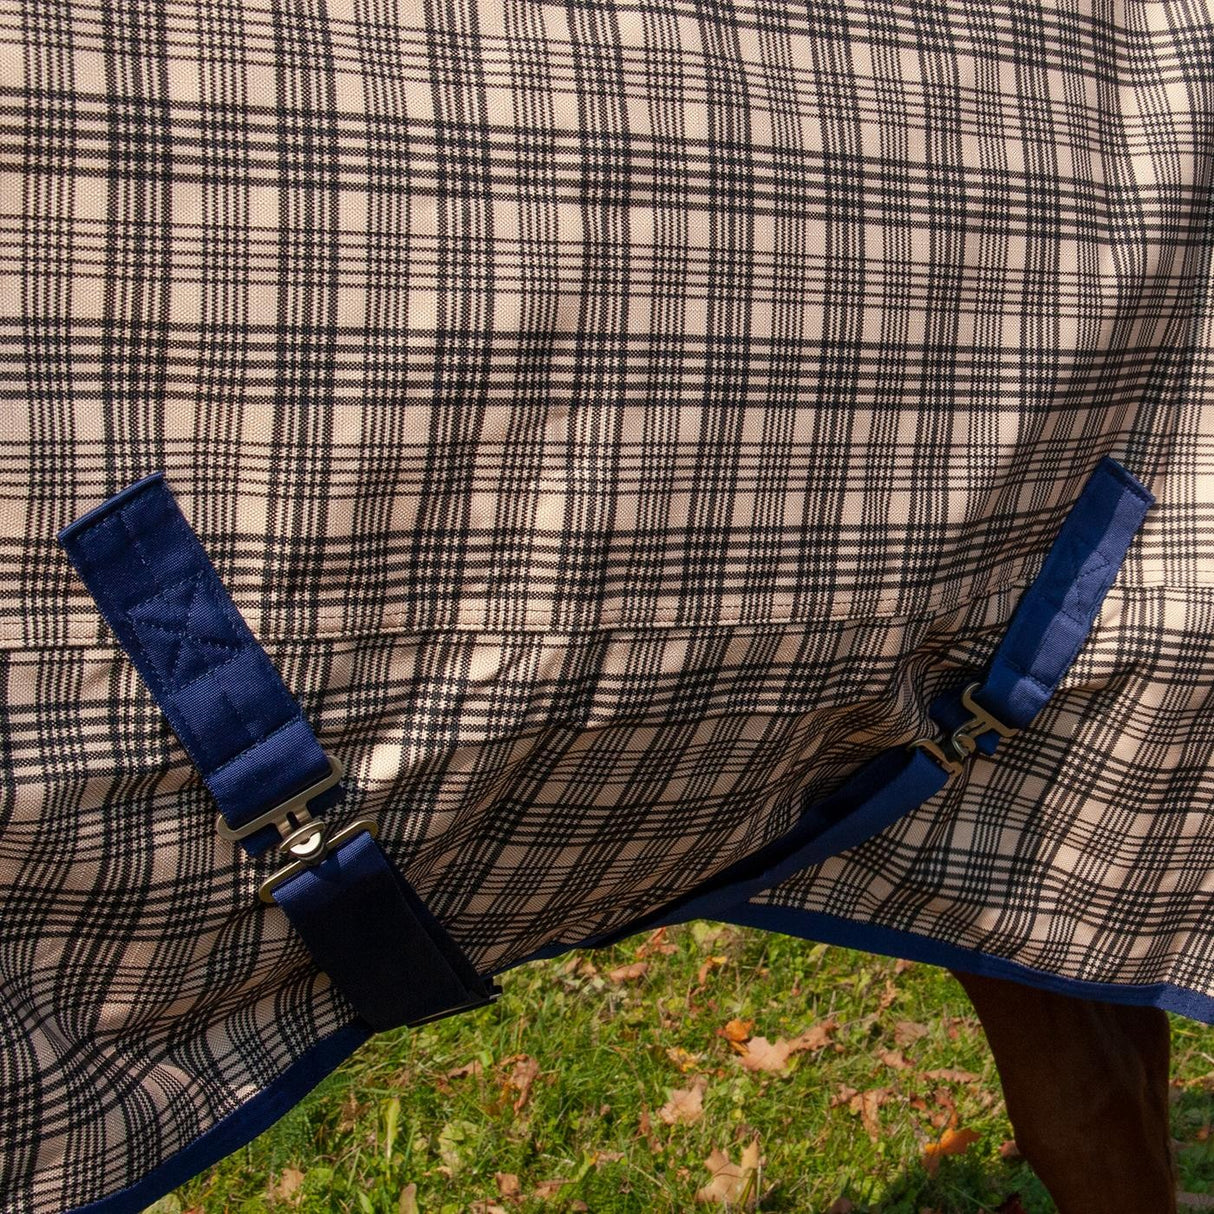 Horse Blanket Rear Leg Straps Kensington - Blanket Accessories, Blankets  Sheets, Supplies Tack